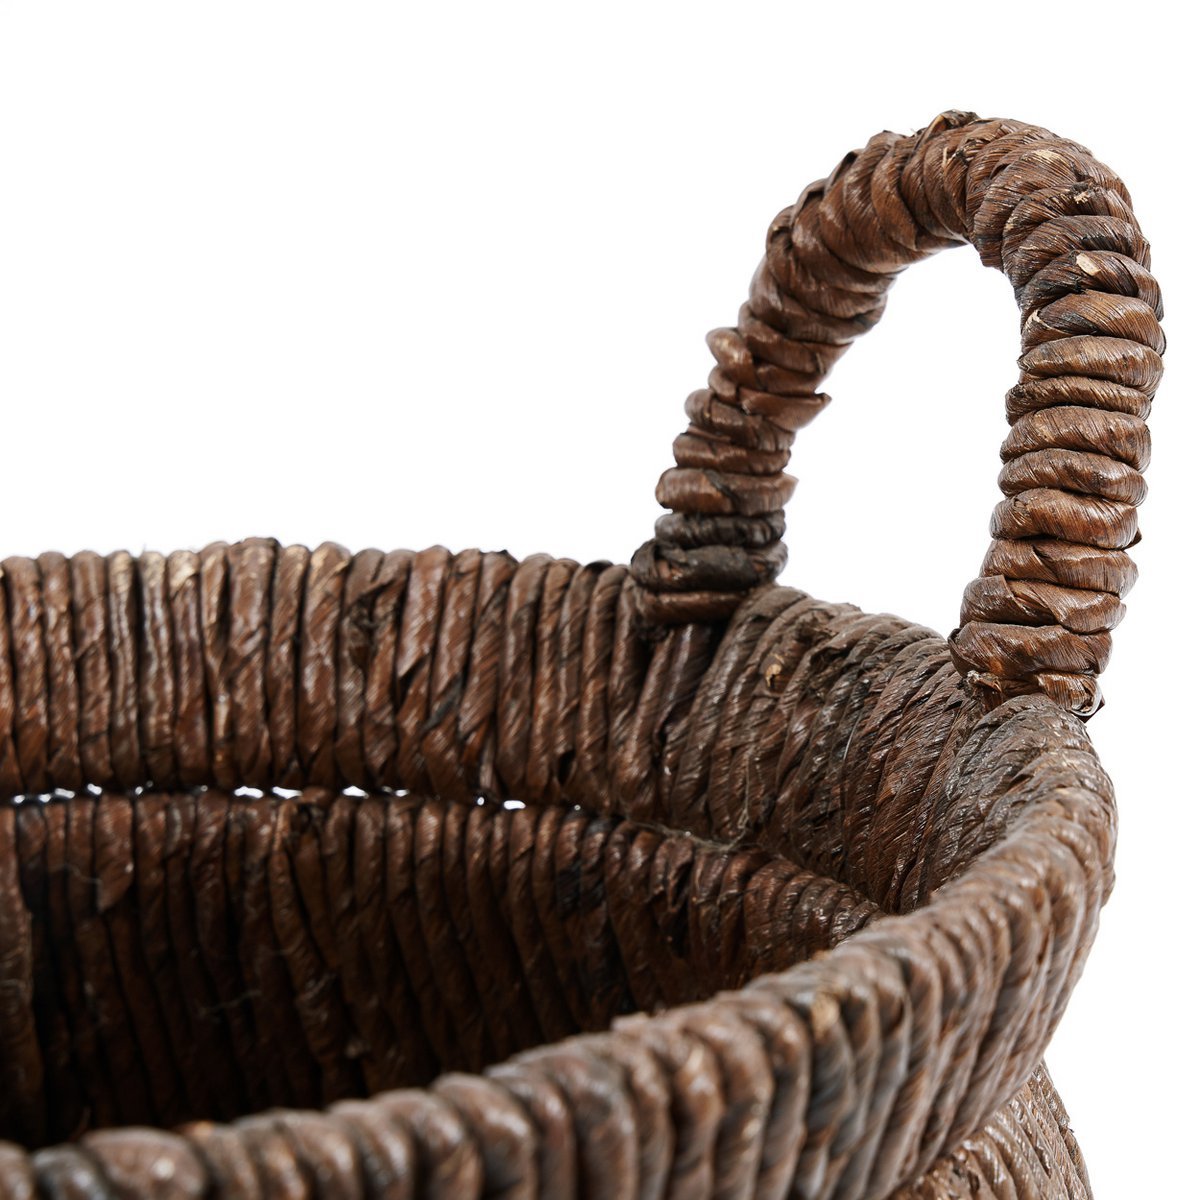 The Chizara basket